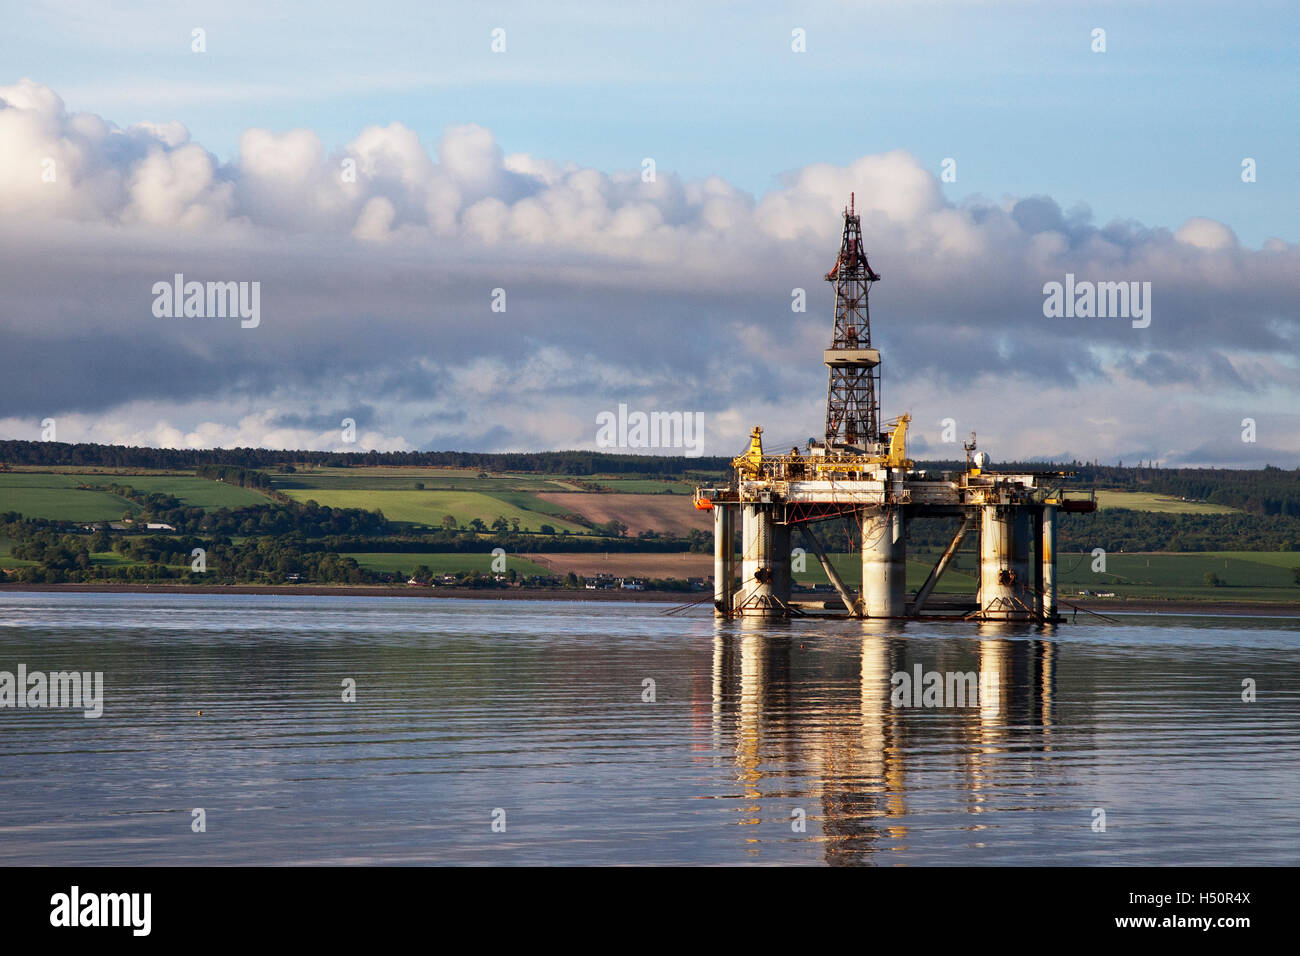 GSF ARCTIC II, Artic, North sea Oil Rig platform vessel in Cromarty Firth, Black Isle in the port of Invergordon, Scotland Stock Photo